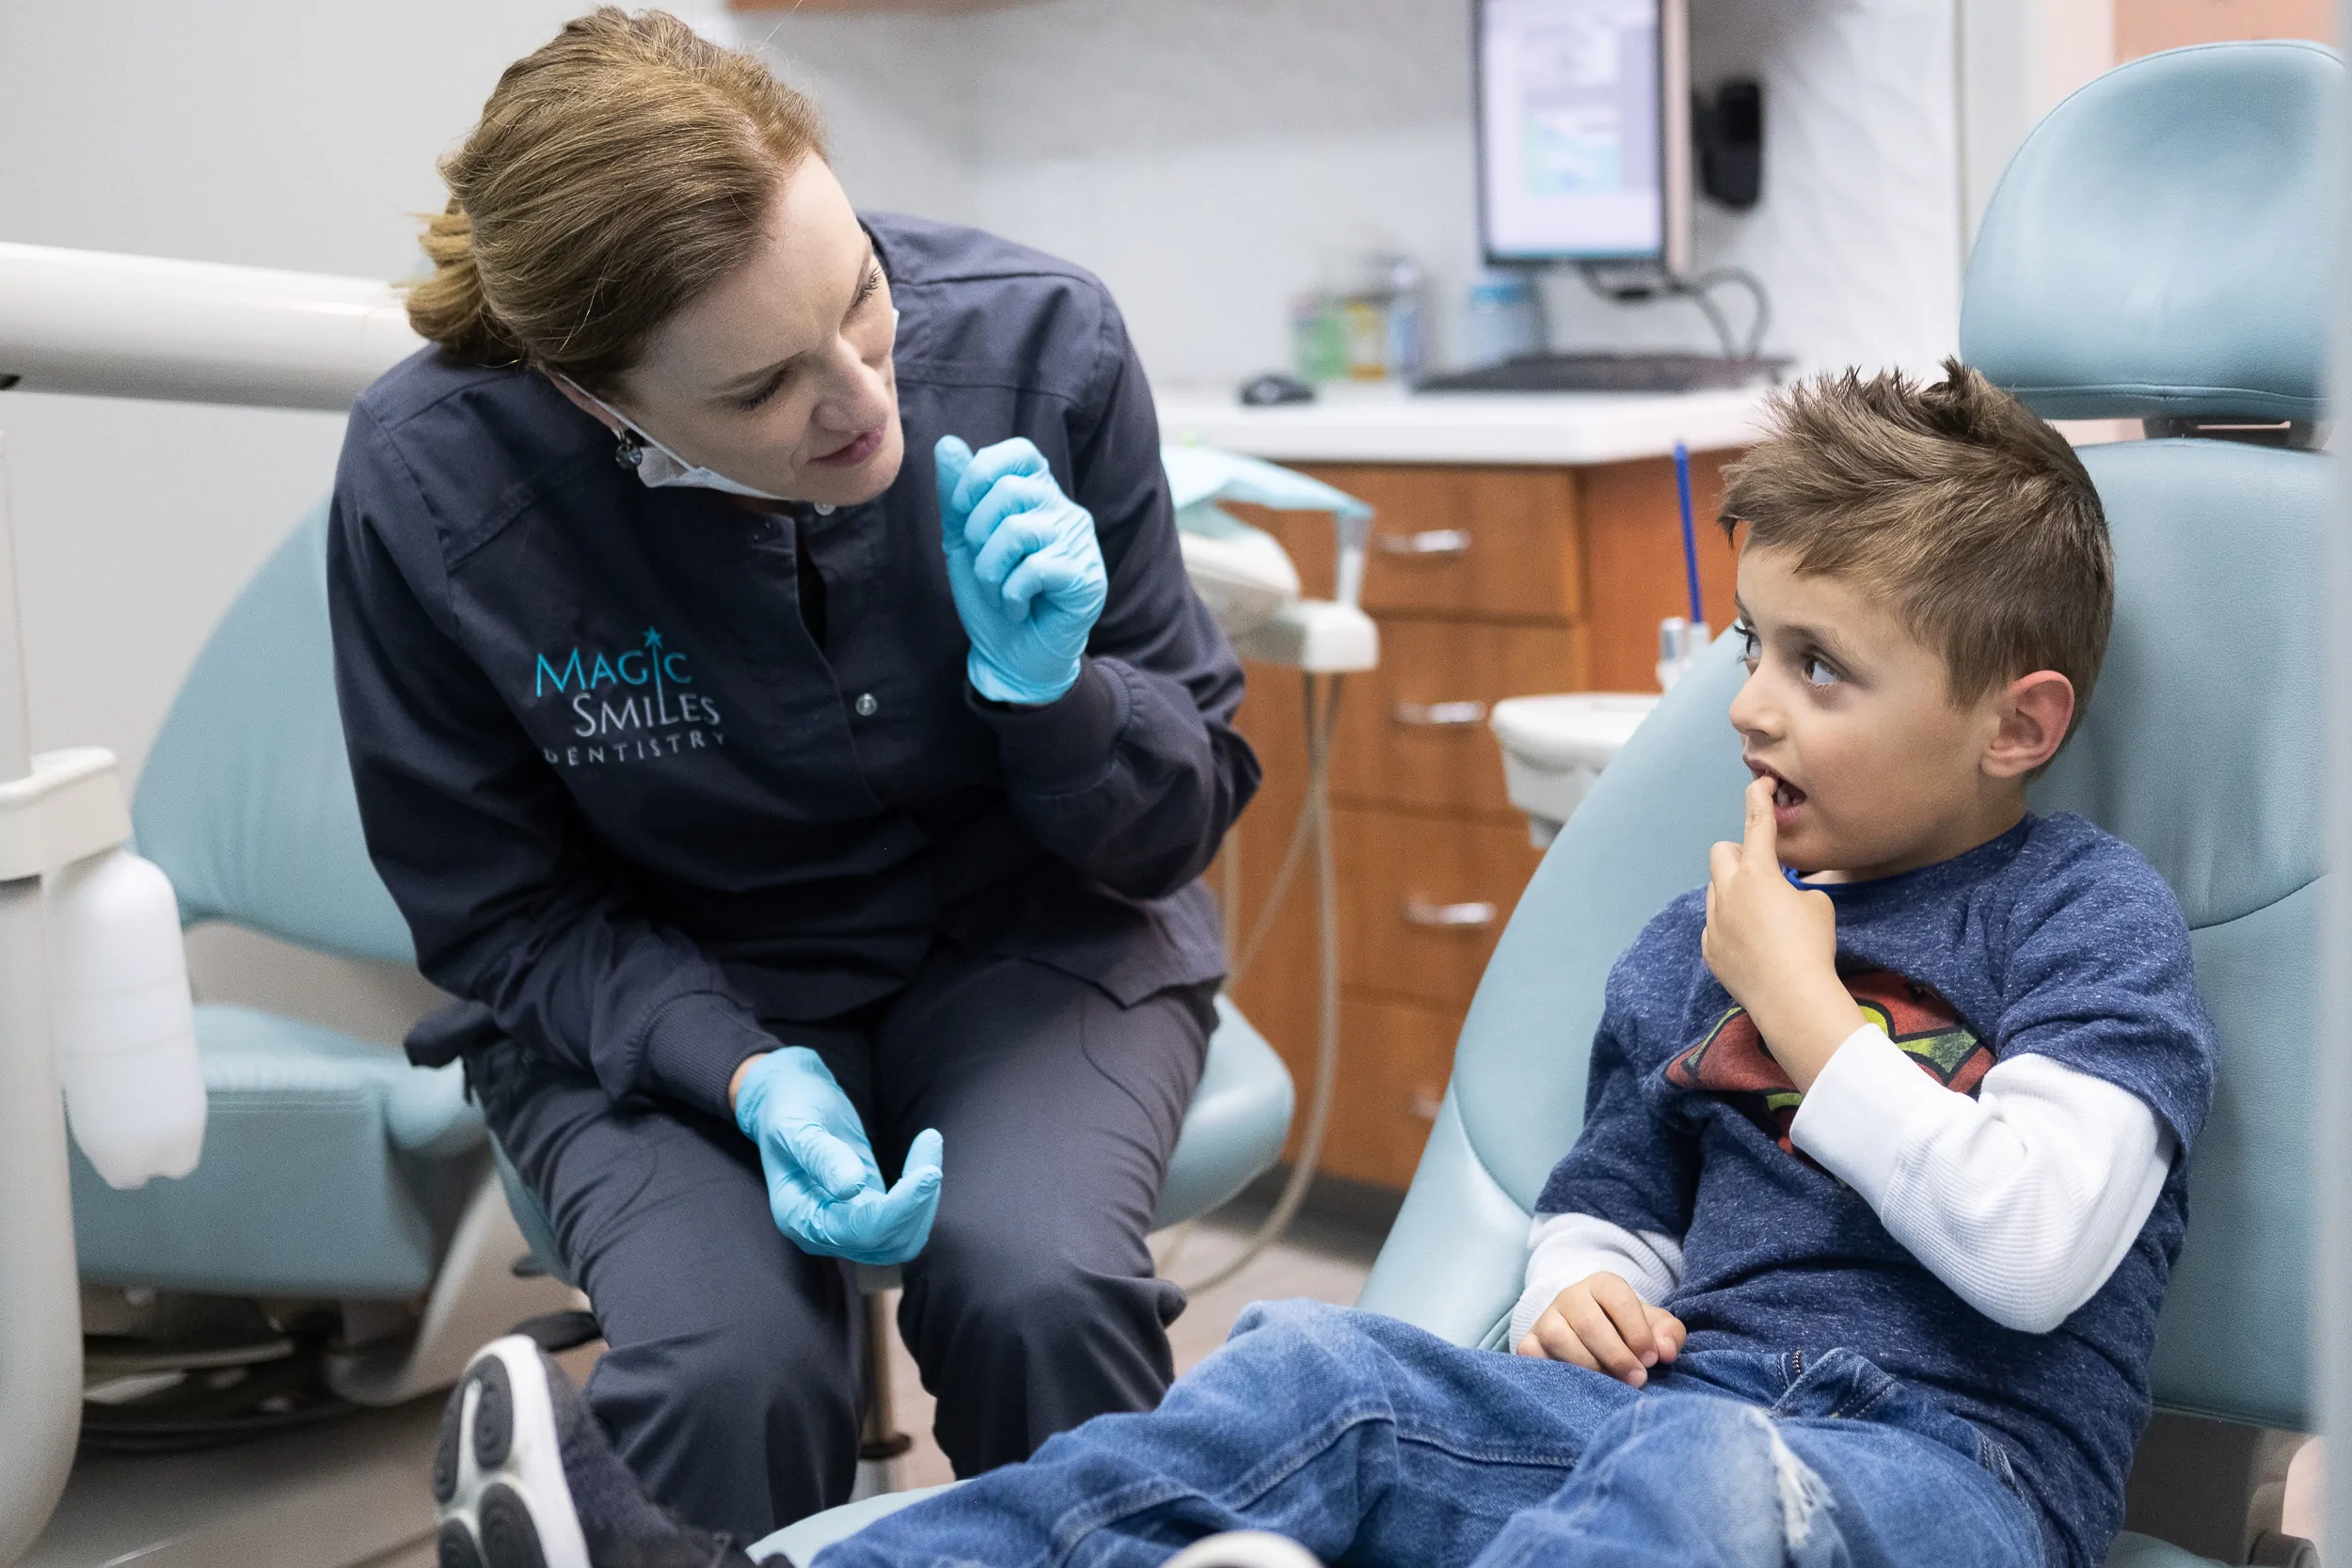 Patients Magic Smiles Dentistry 2019 El Dorado Hills California Dentist 84 1 - Request an Appointment